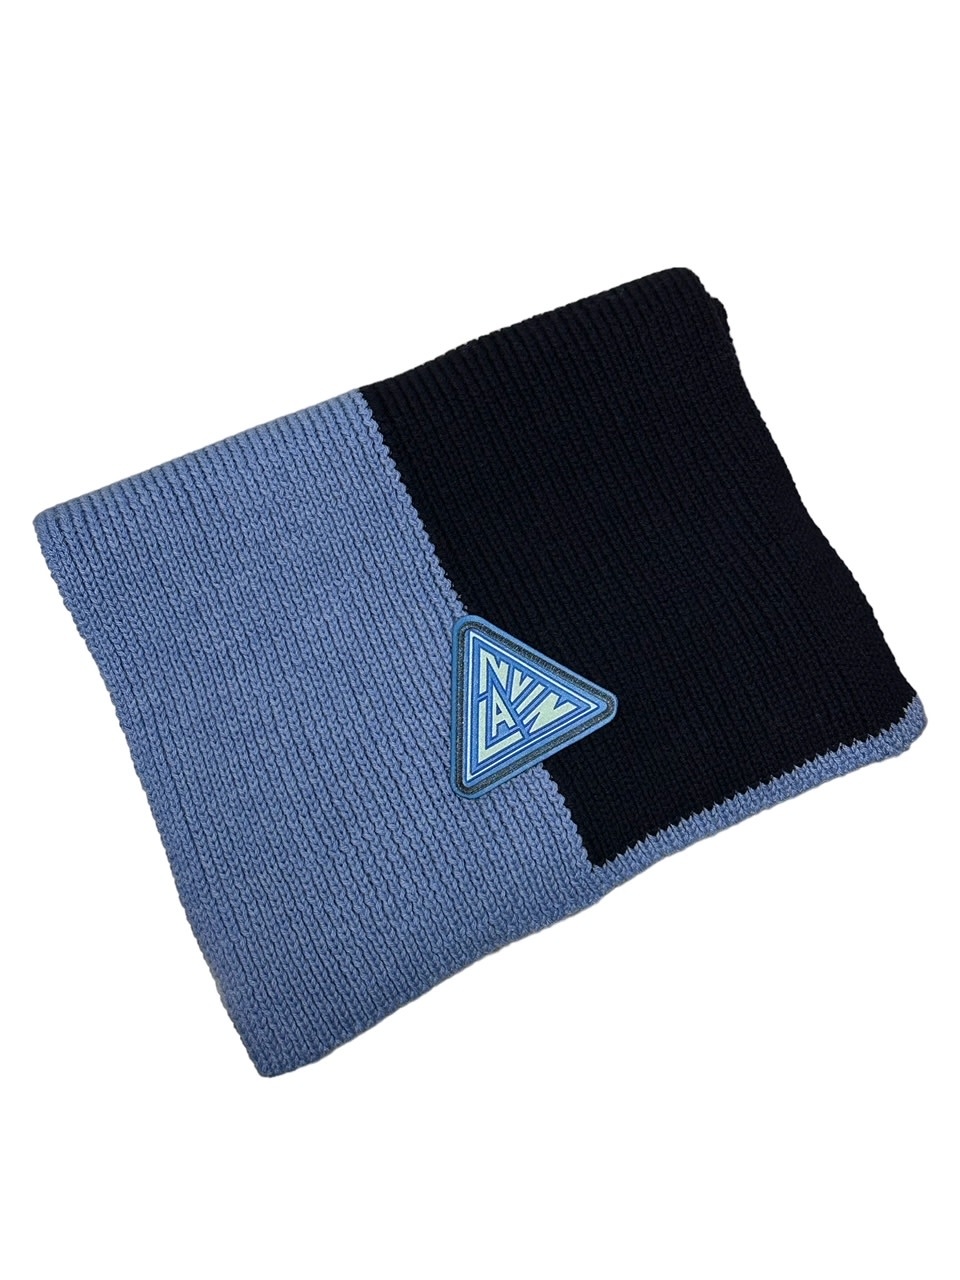 Lanvin - 100% Wool Scarf with Logo - 30x180cm - Blue / Black-1